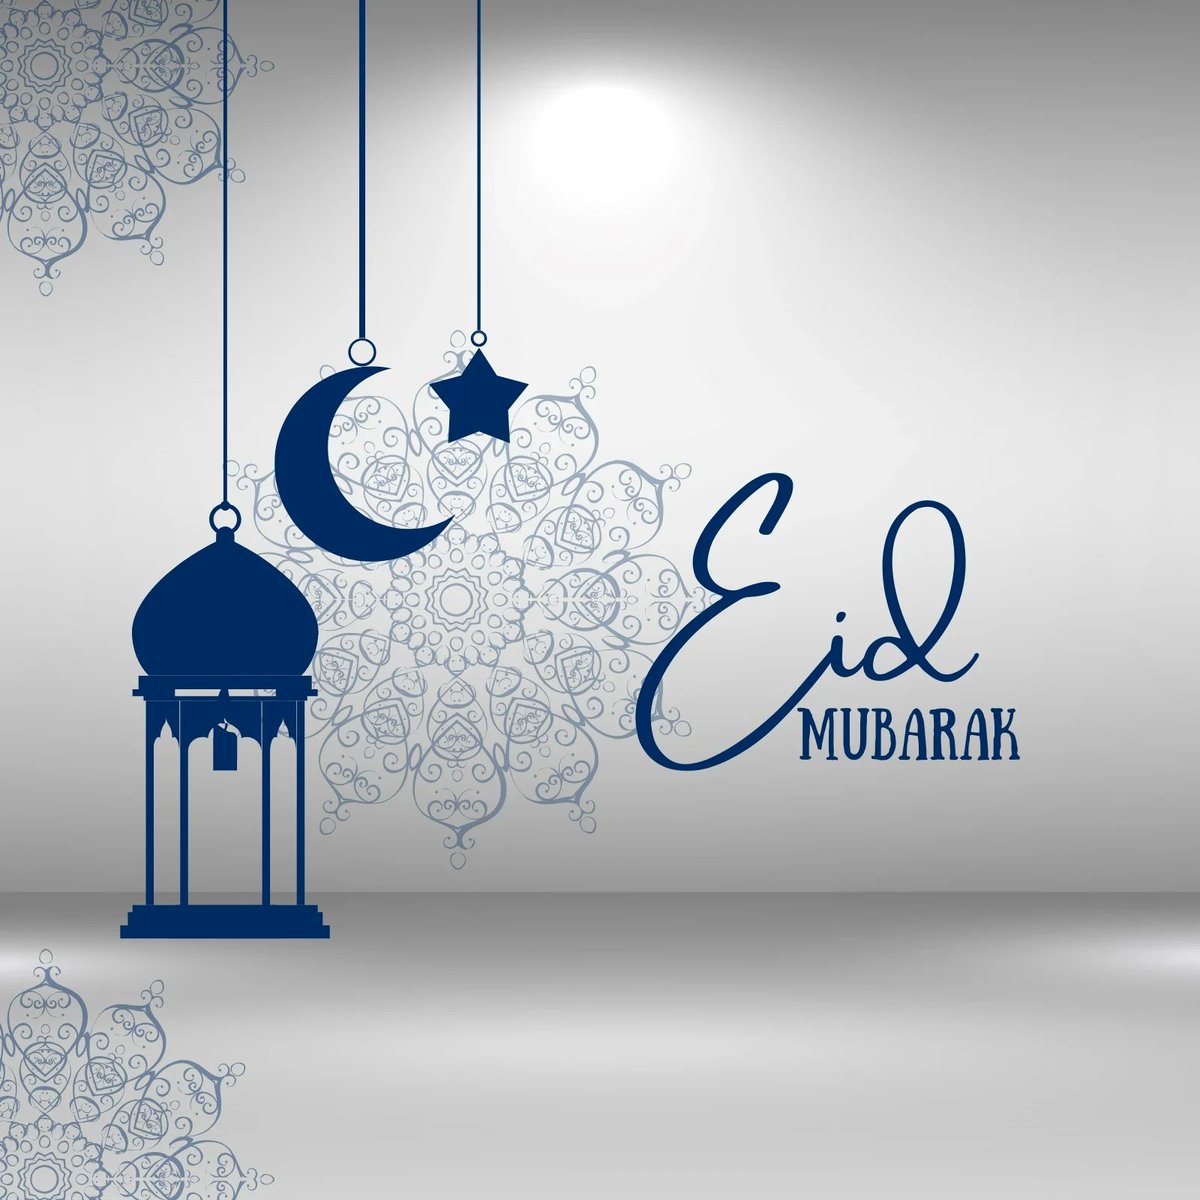 Eid Mubarak to all who celebrate ✨